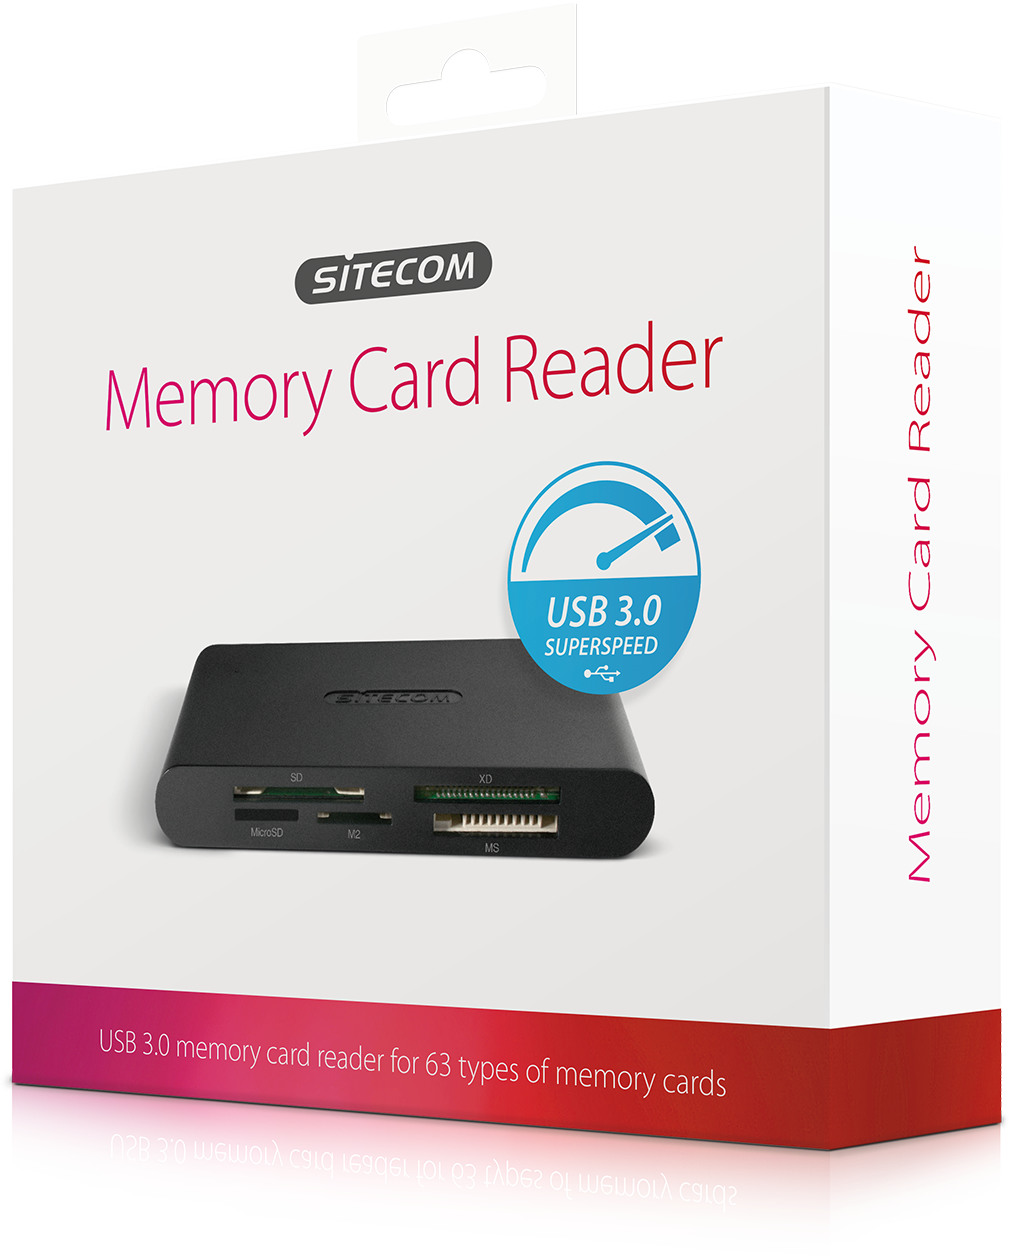 SITECOM USB 3.0 Memory Card Reader MD-061